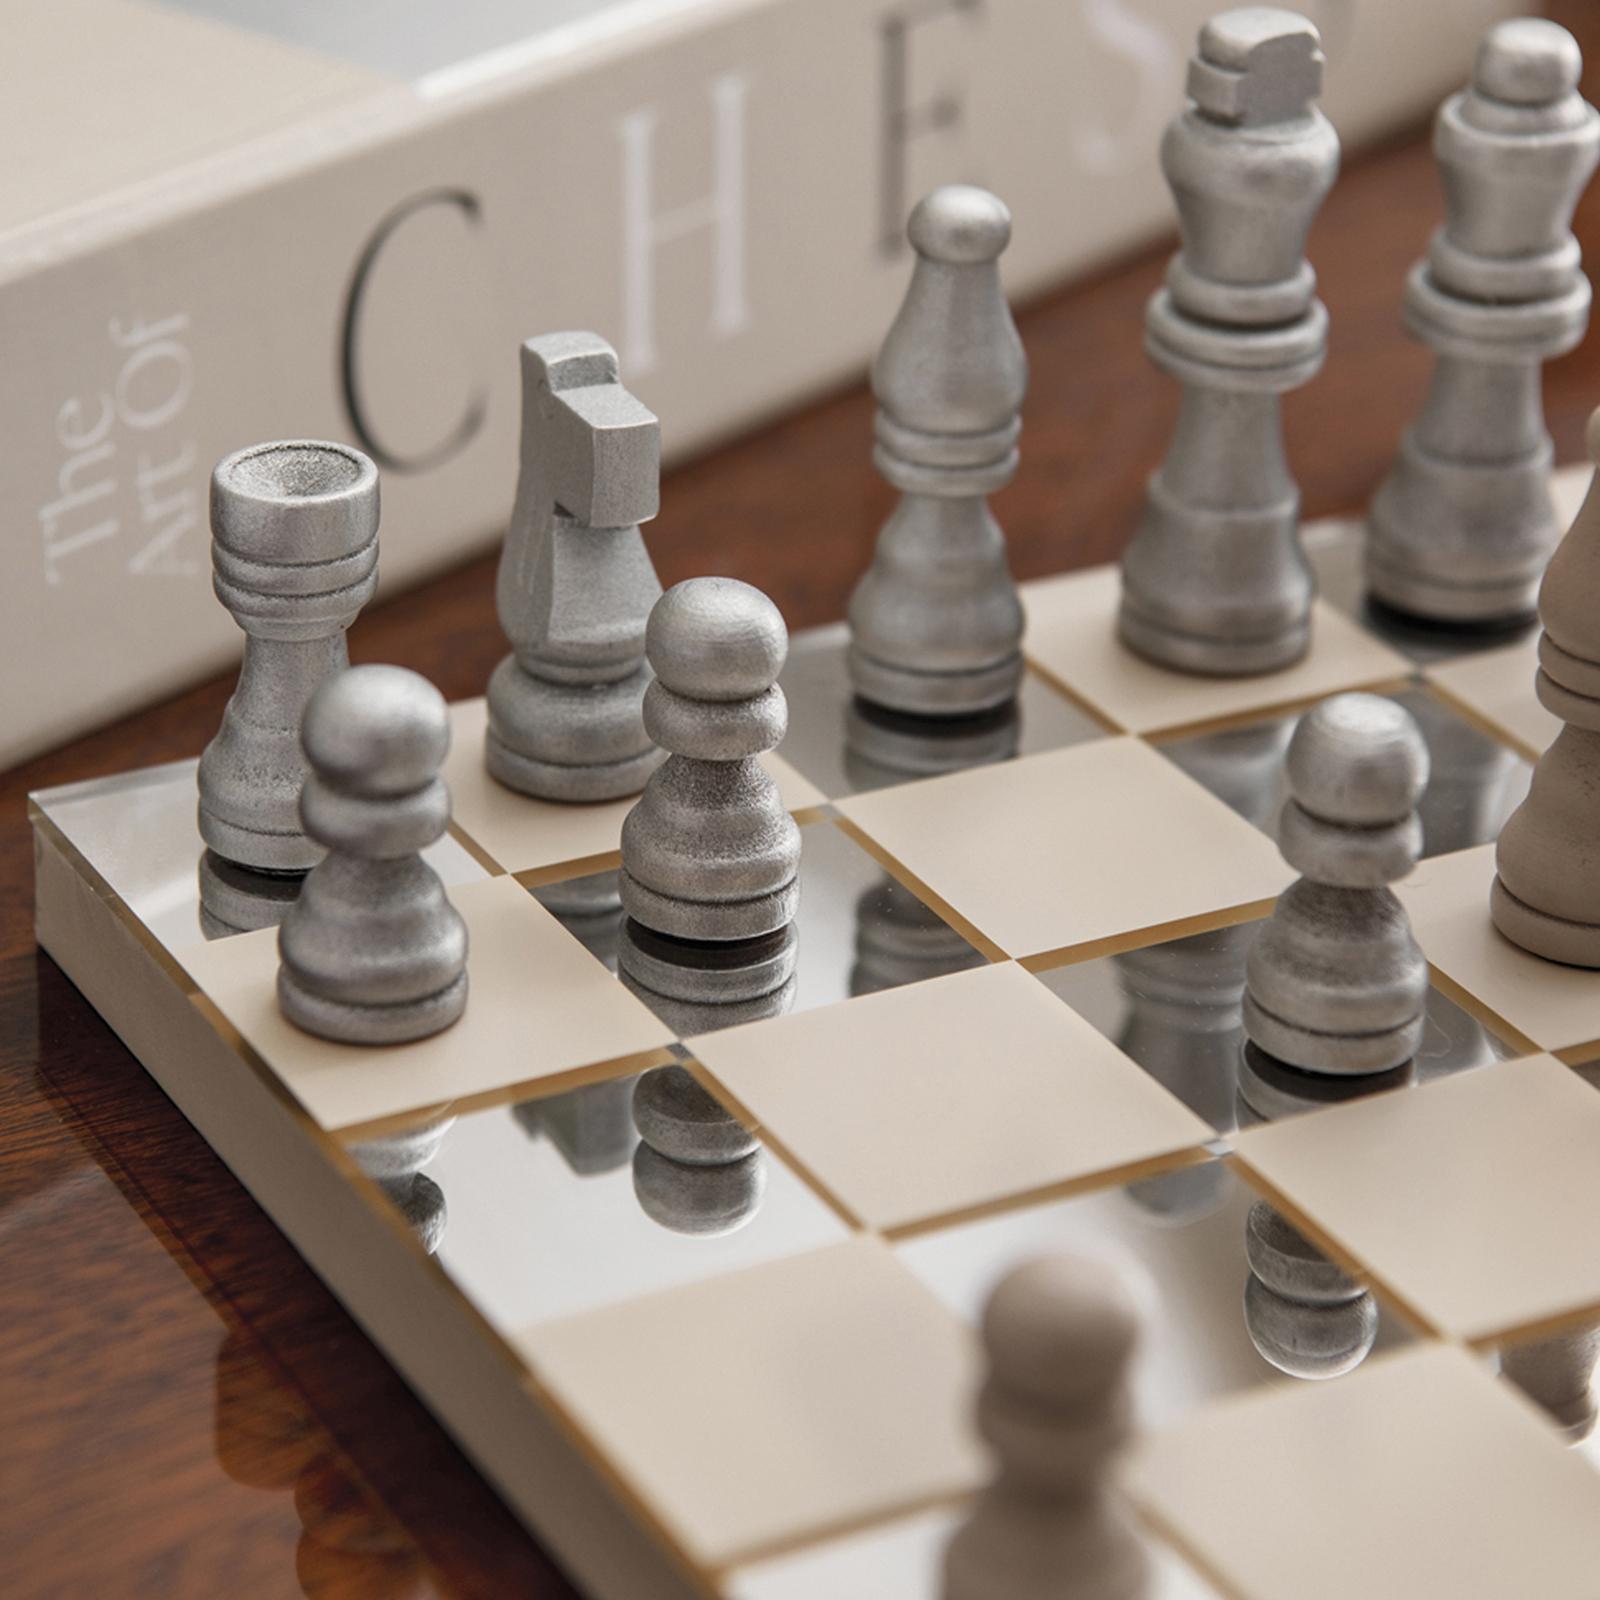 chanel chess set